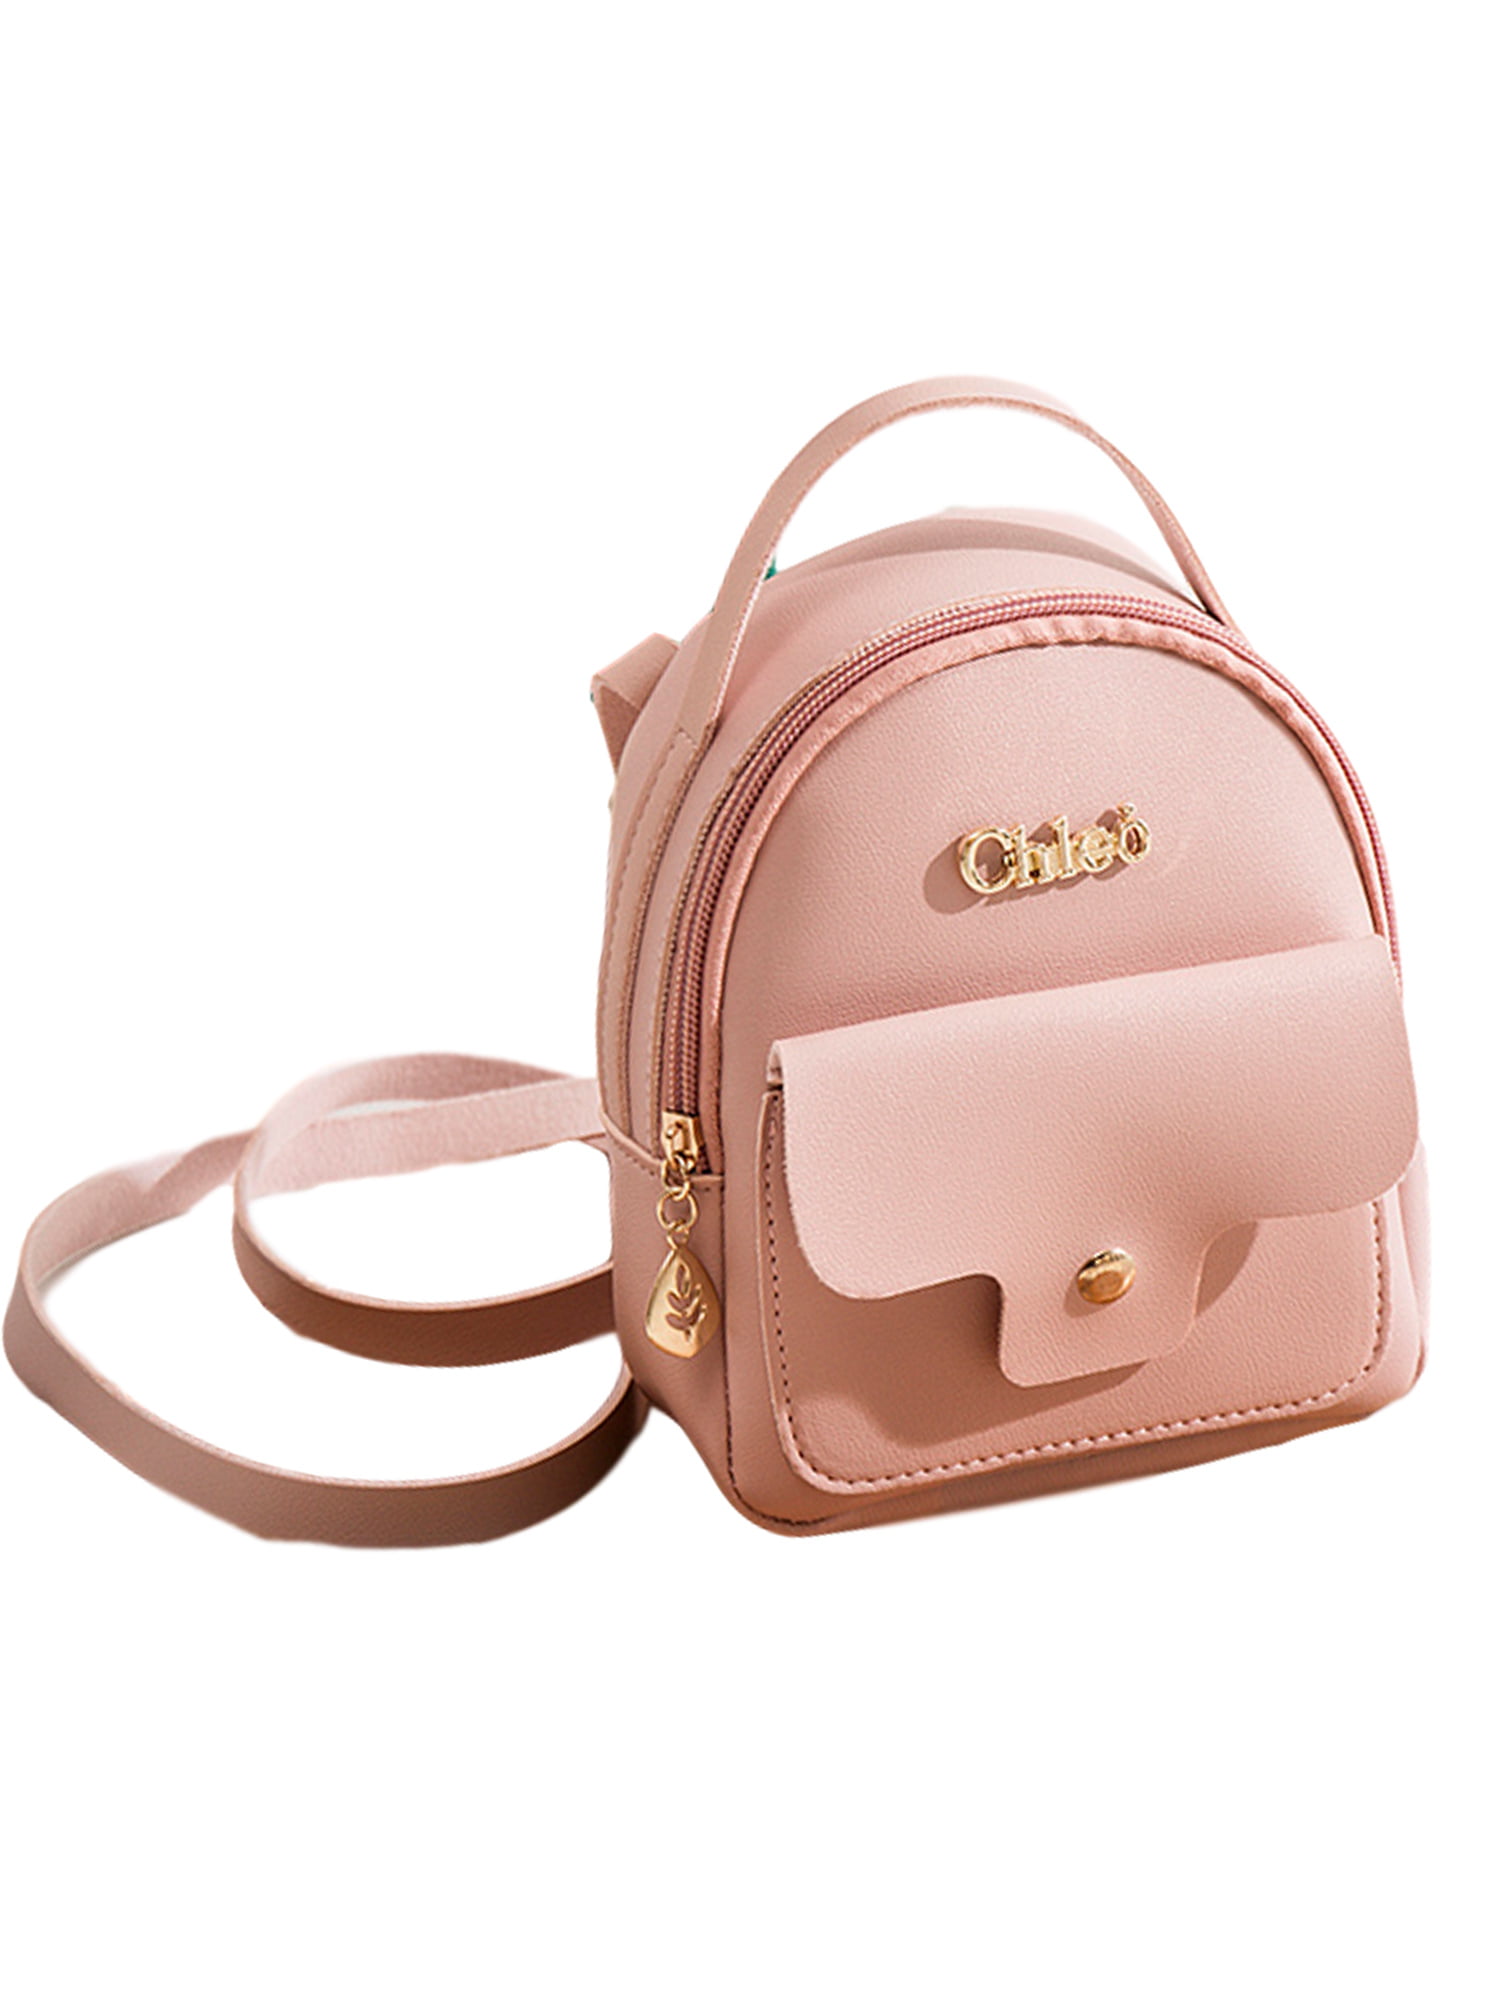 Women Girl Backpack Travel Leather Handbag Rucksack Shoulder School Bag Travel 